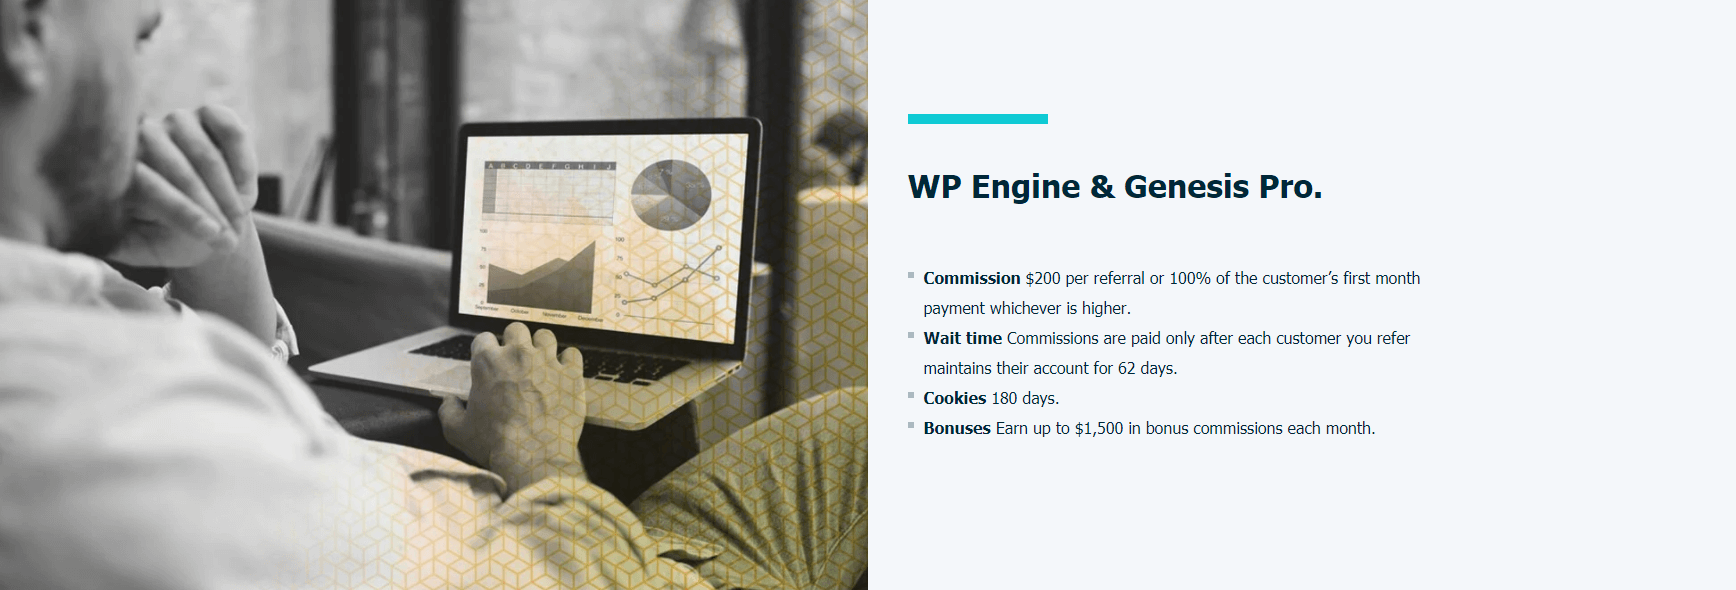 WP Engine's affiliate program landing page.